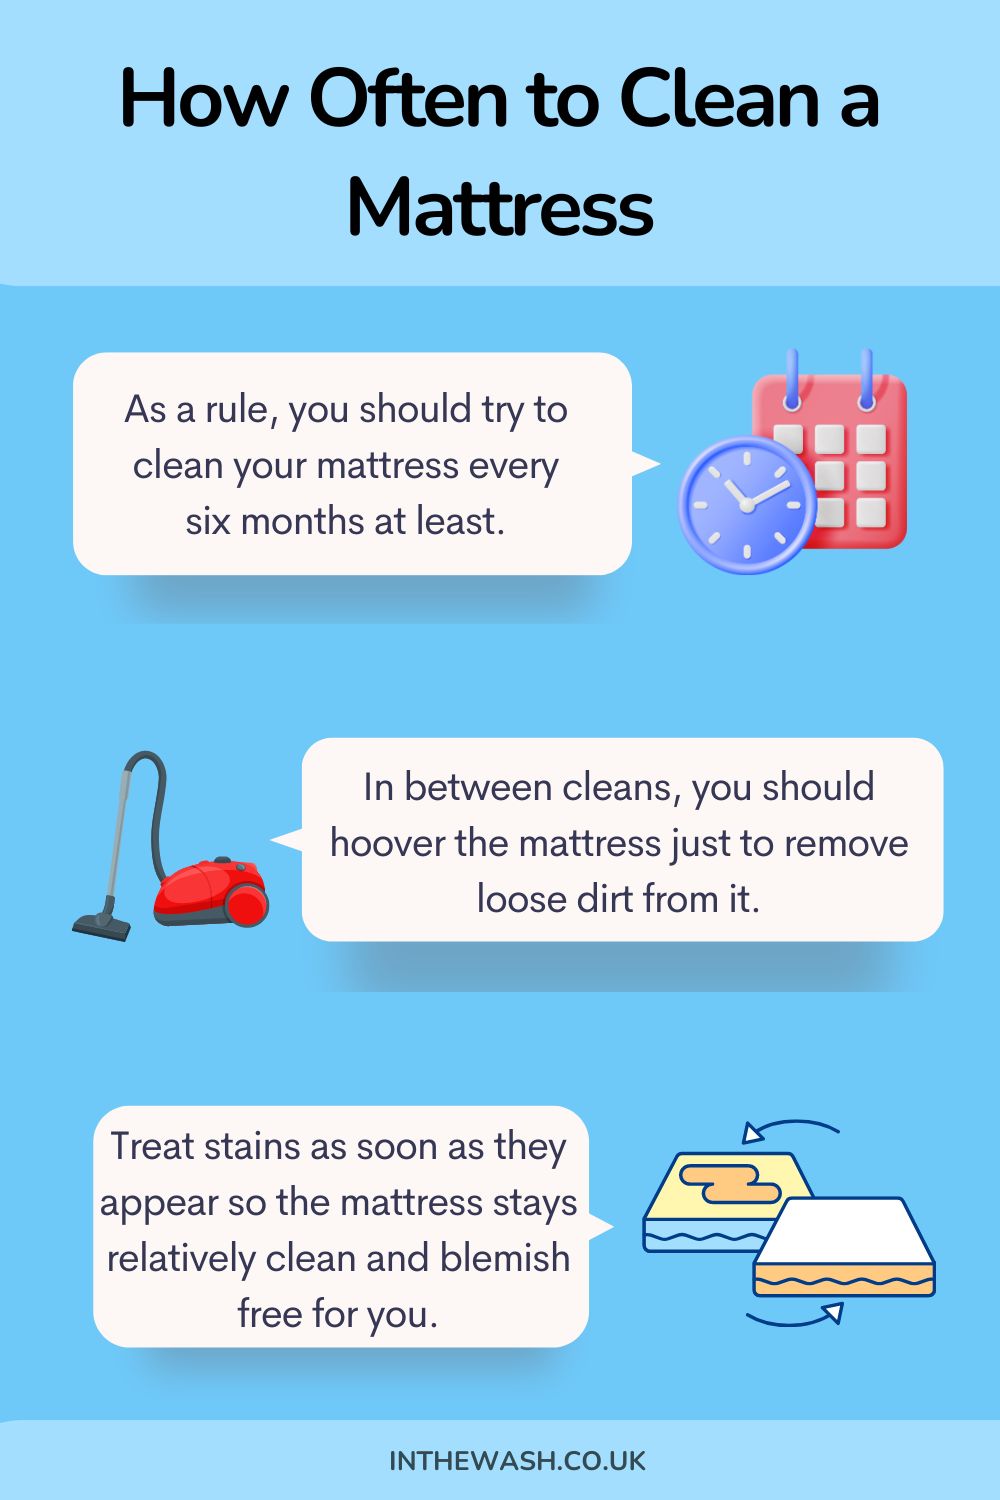 How often to clean a mattress